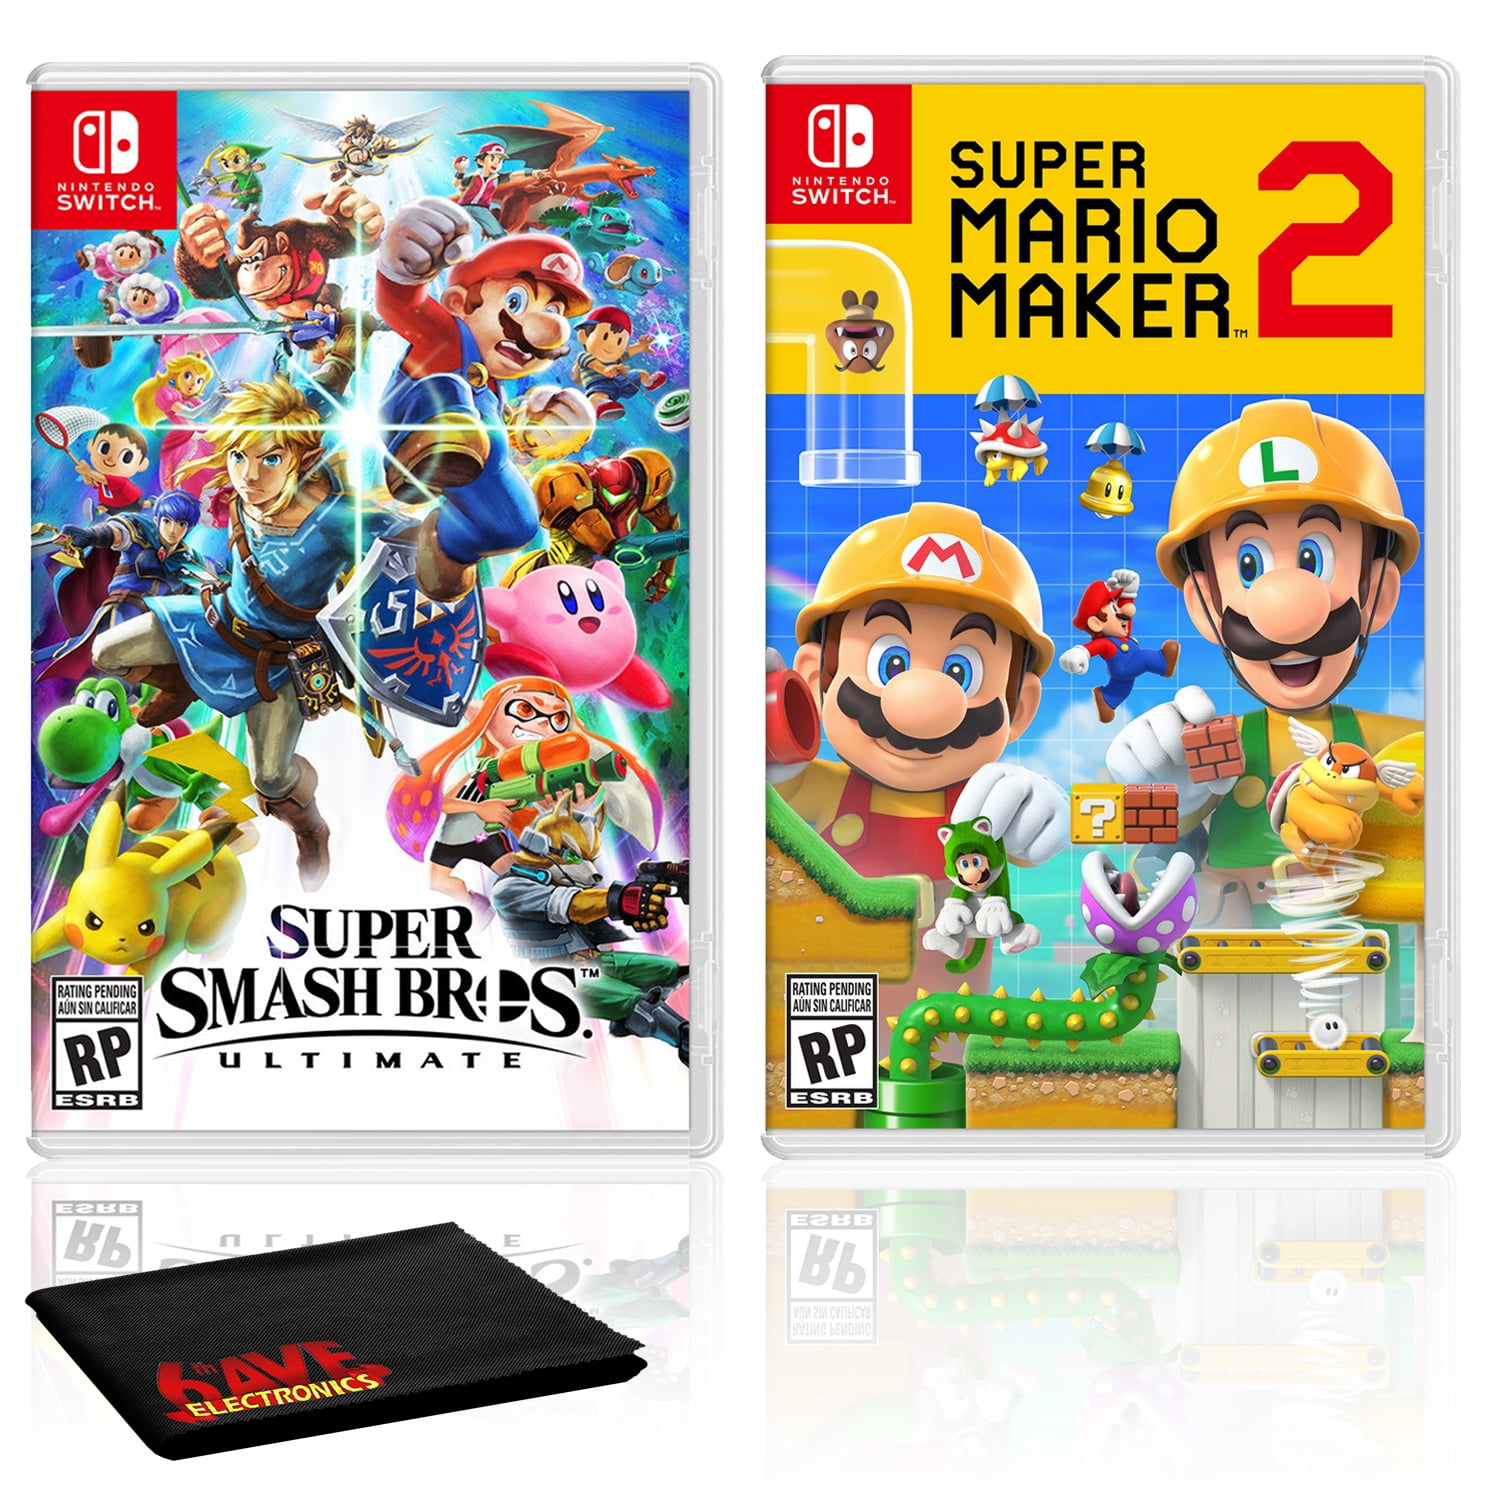 Smash Bros. Ultimate with Super Mario Maker 2, Switch, HACPAAABA-006 Walmart.com